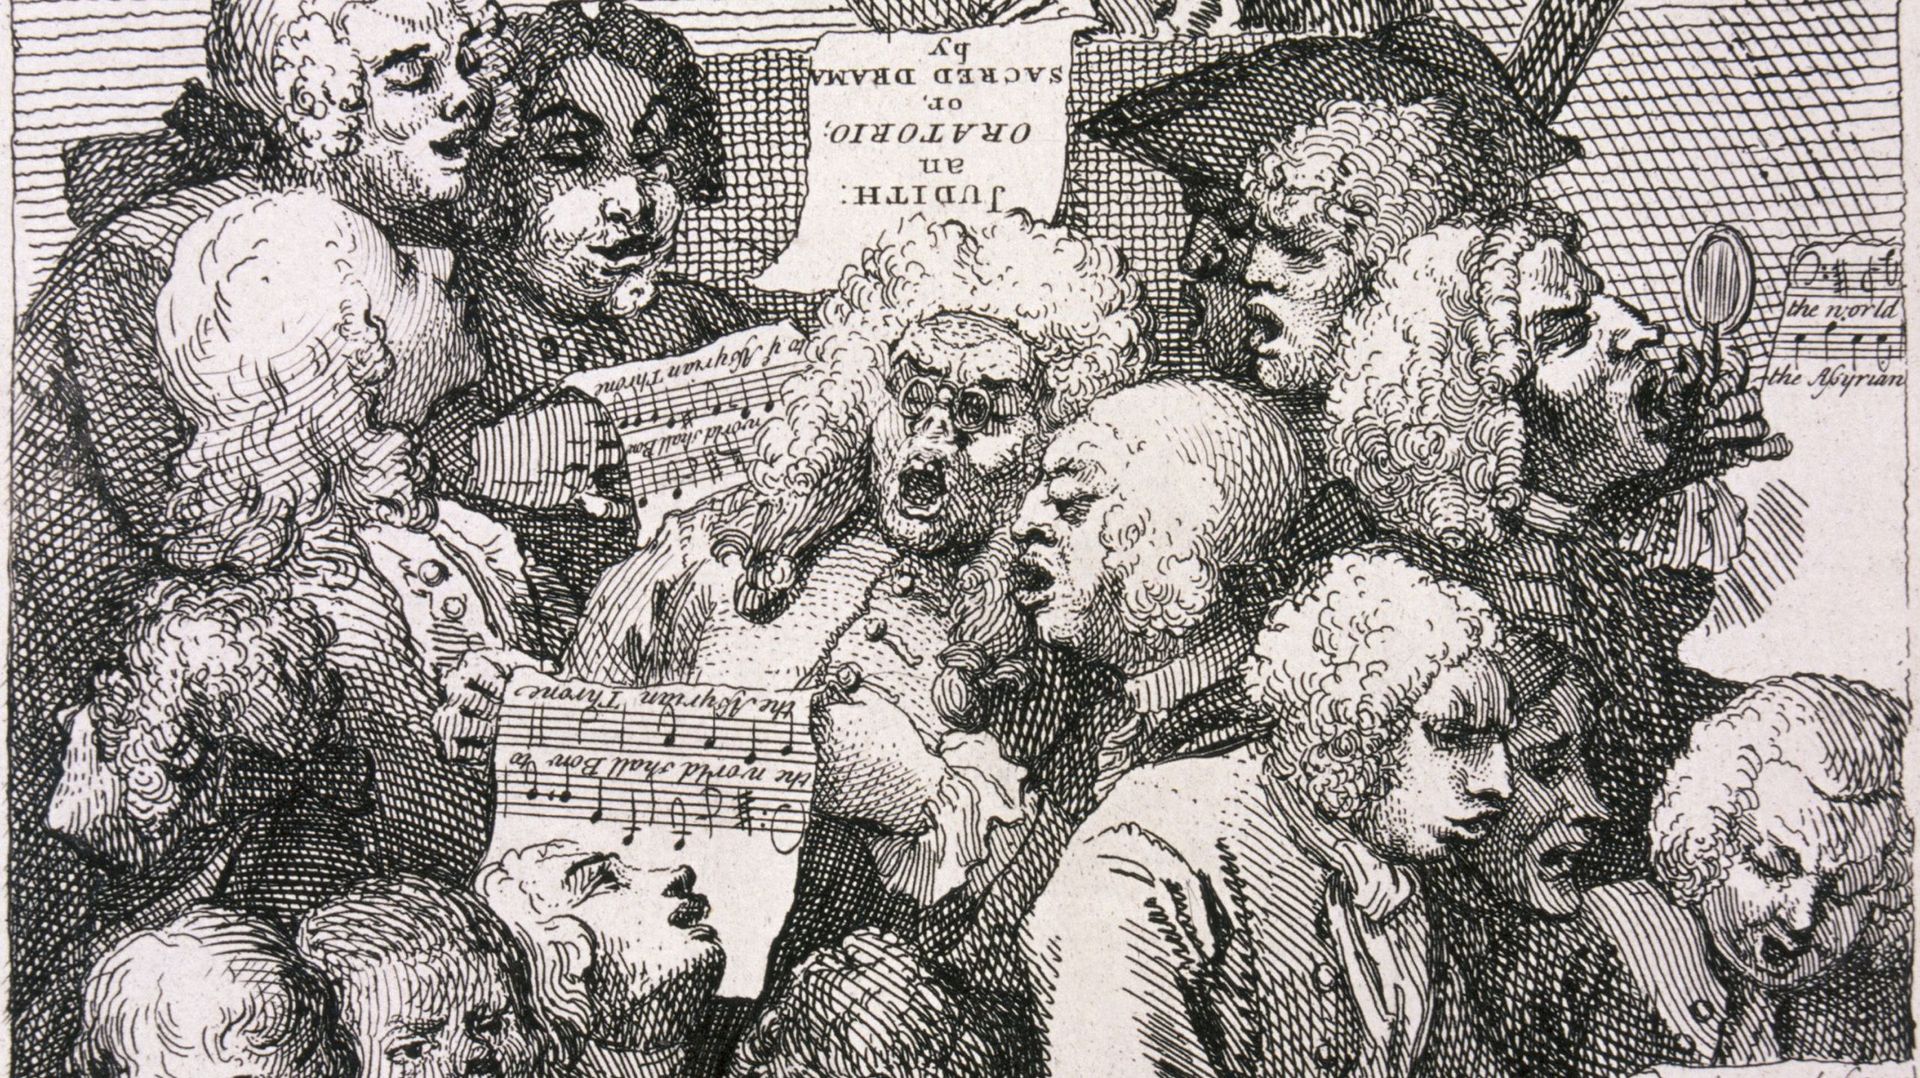 'A chorus of singers', 1732. Artist: William Hogarth